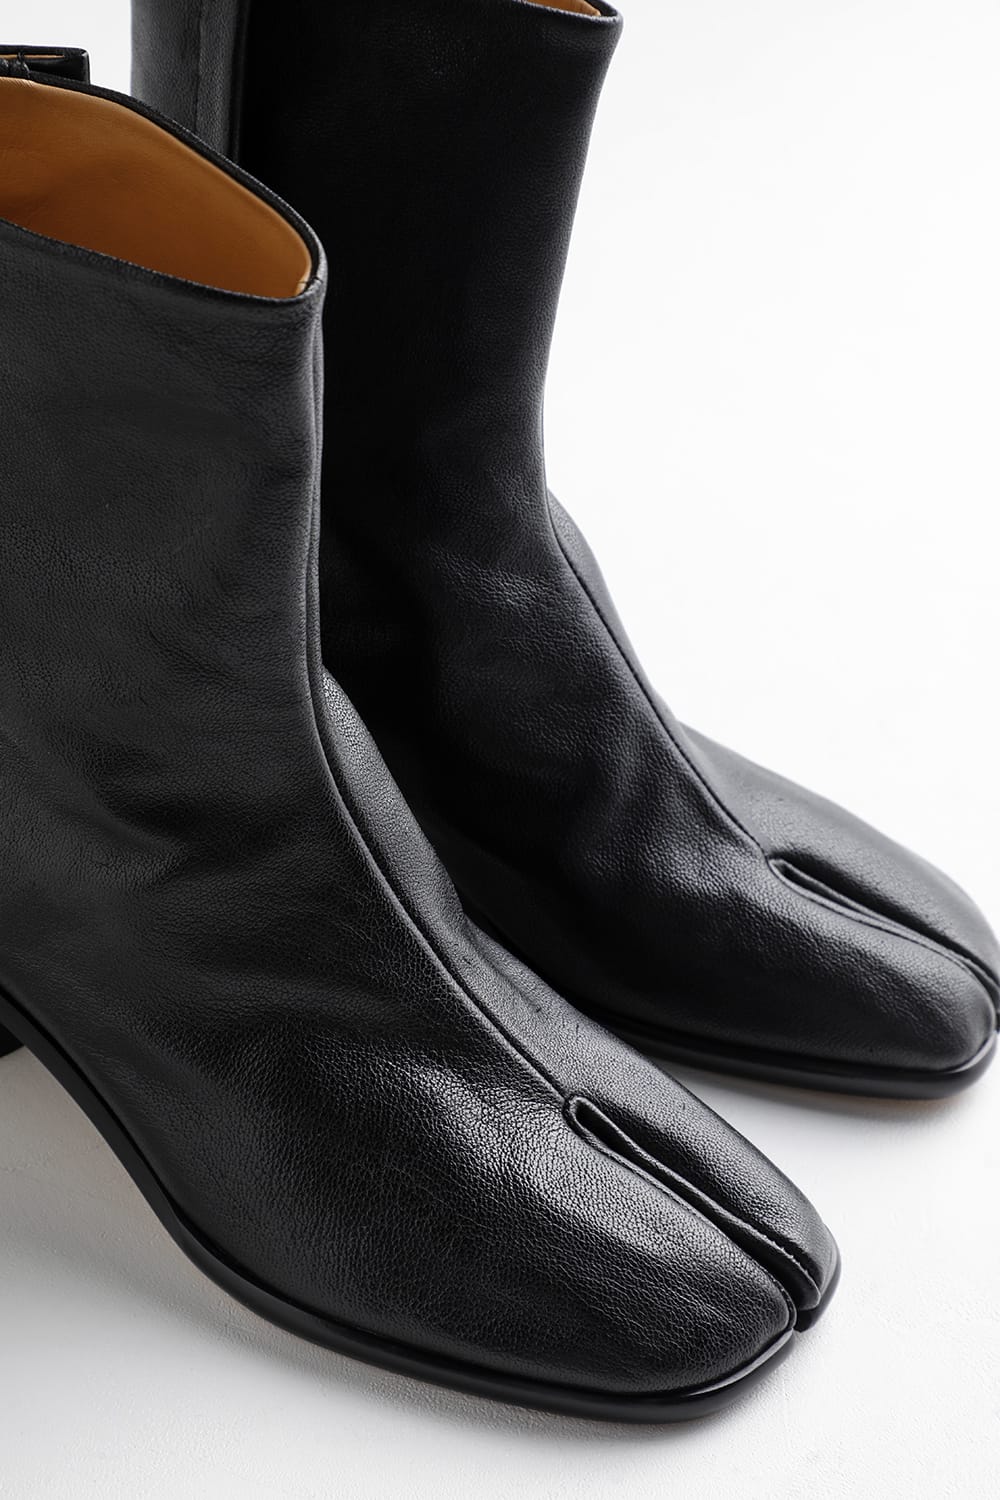 Maison Margiela Tabi Ankle Boots 6cm Introducing product details!